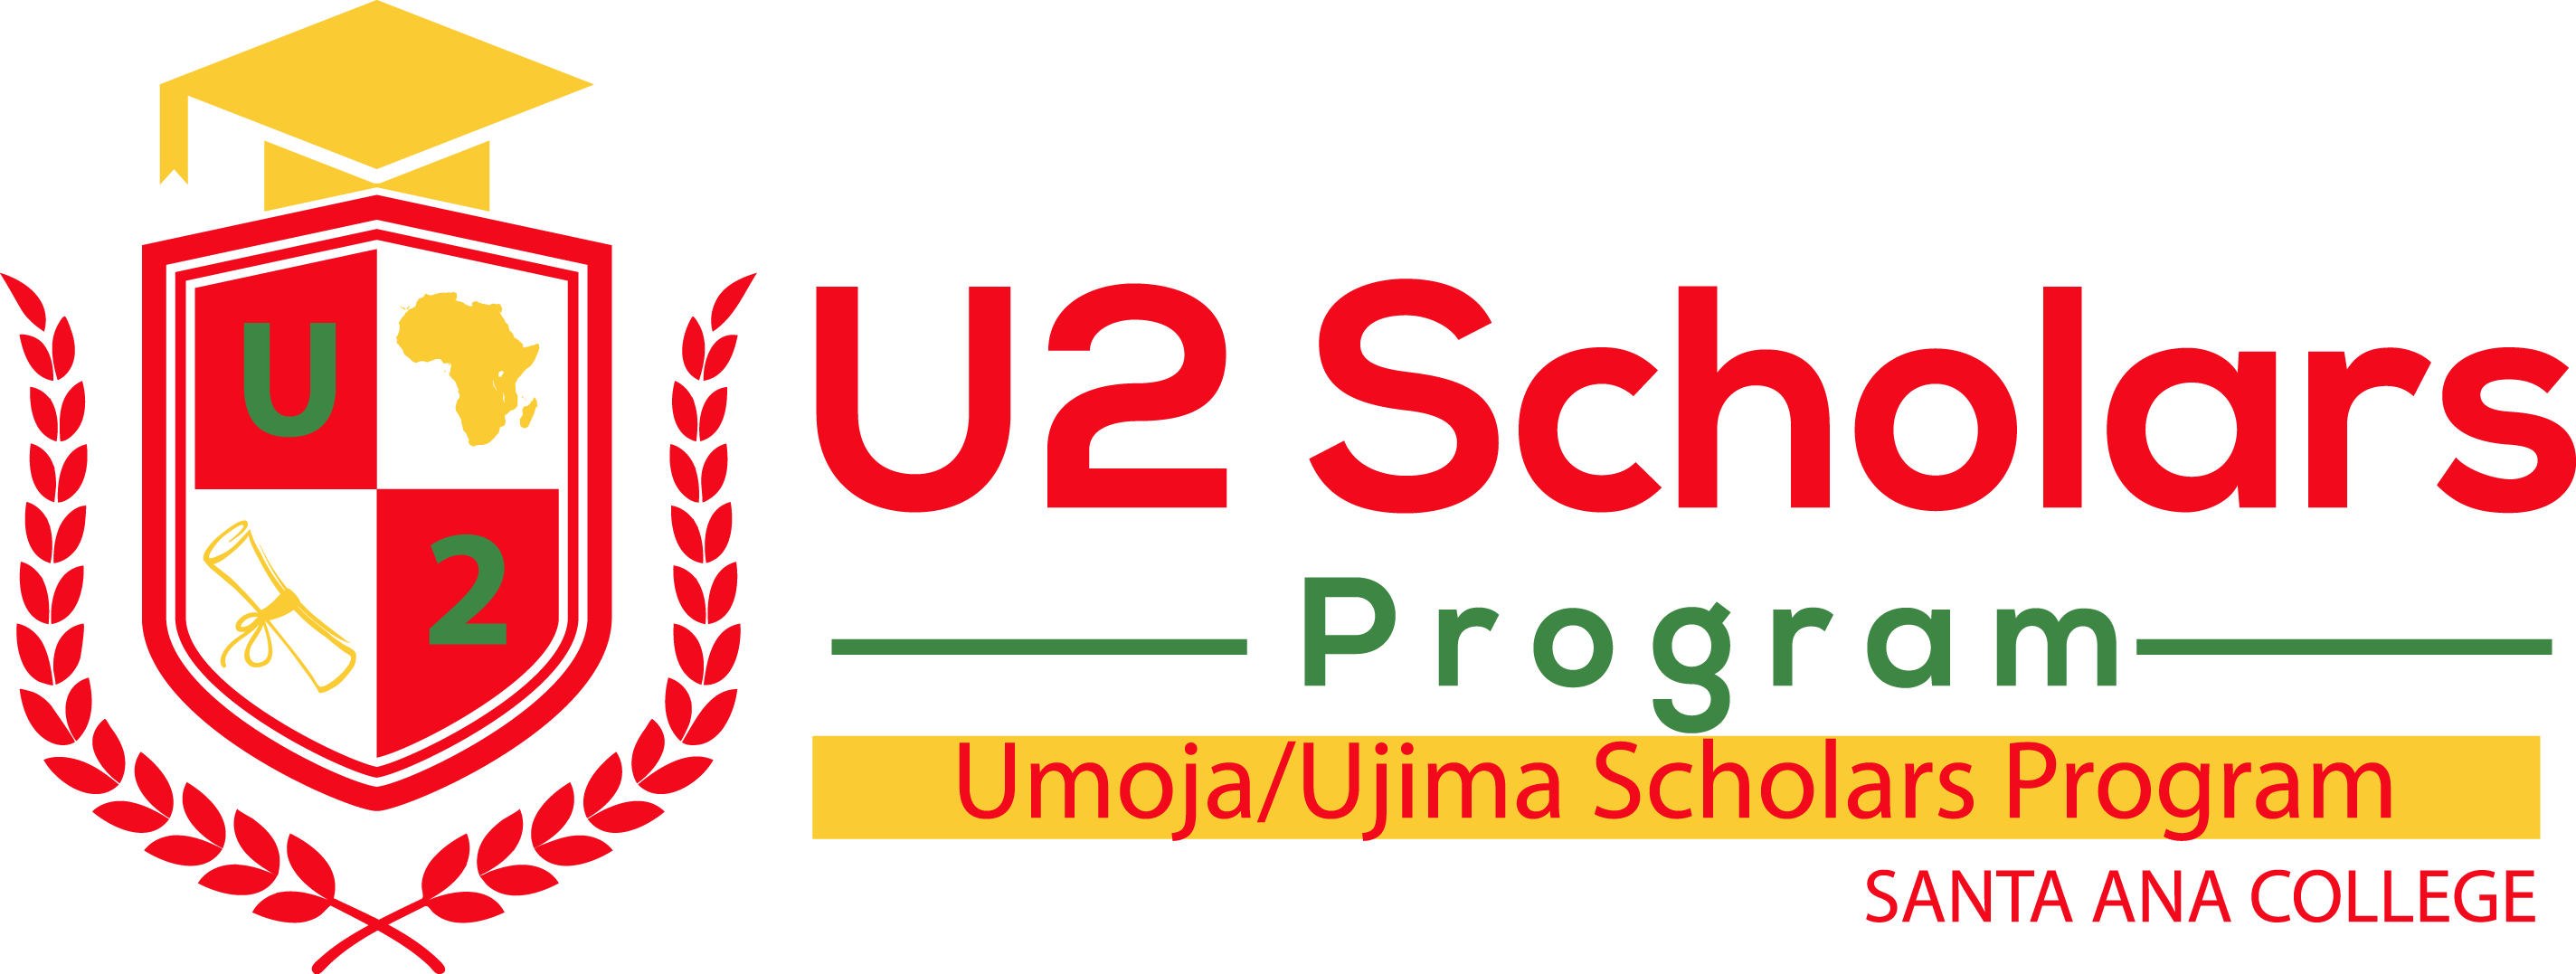 U2 Scholars Program6.png